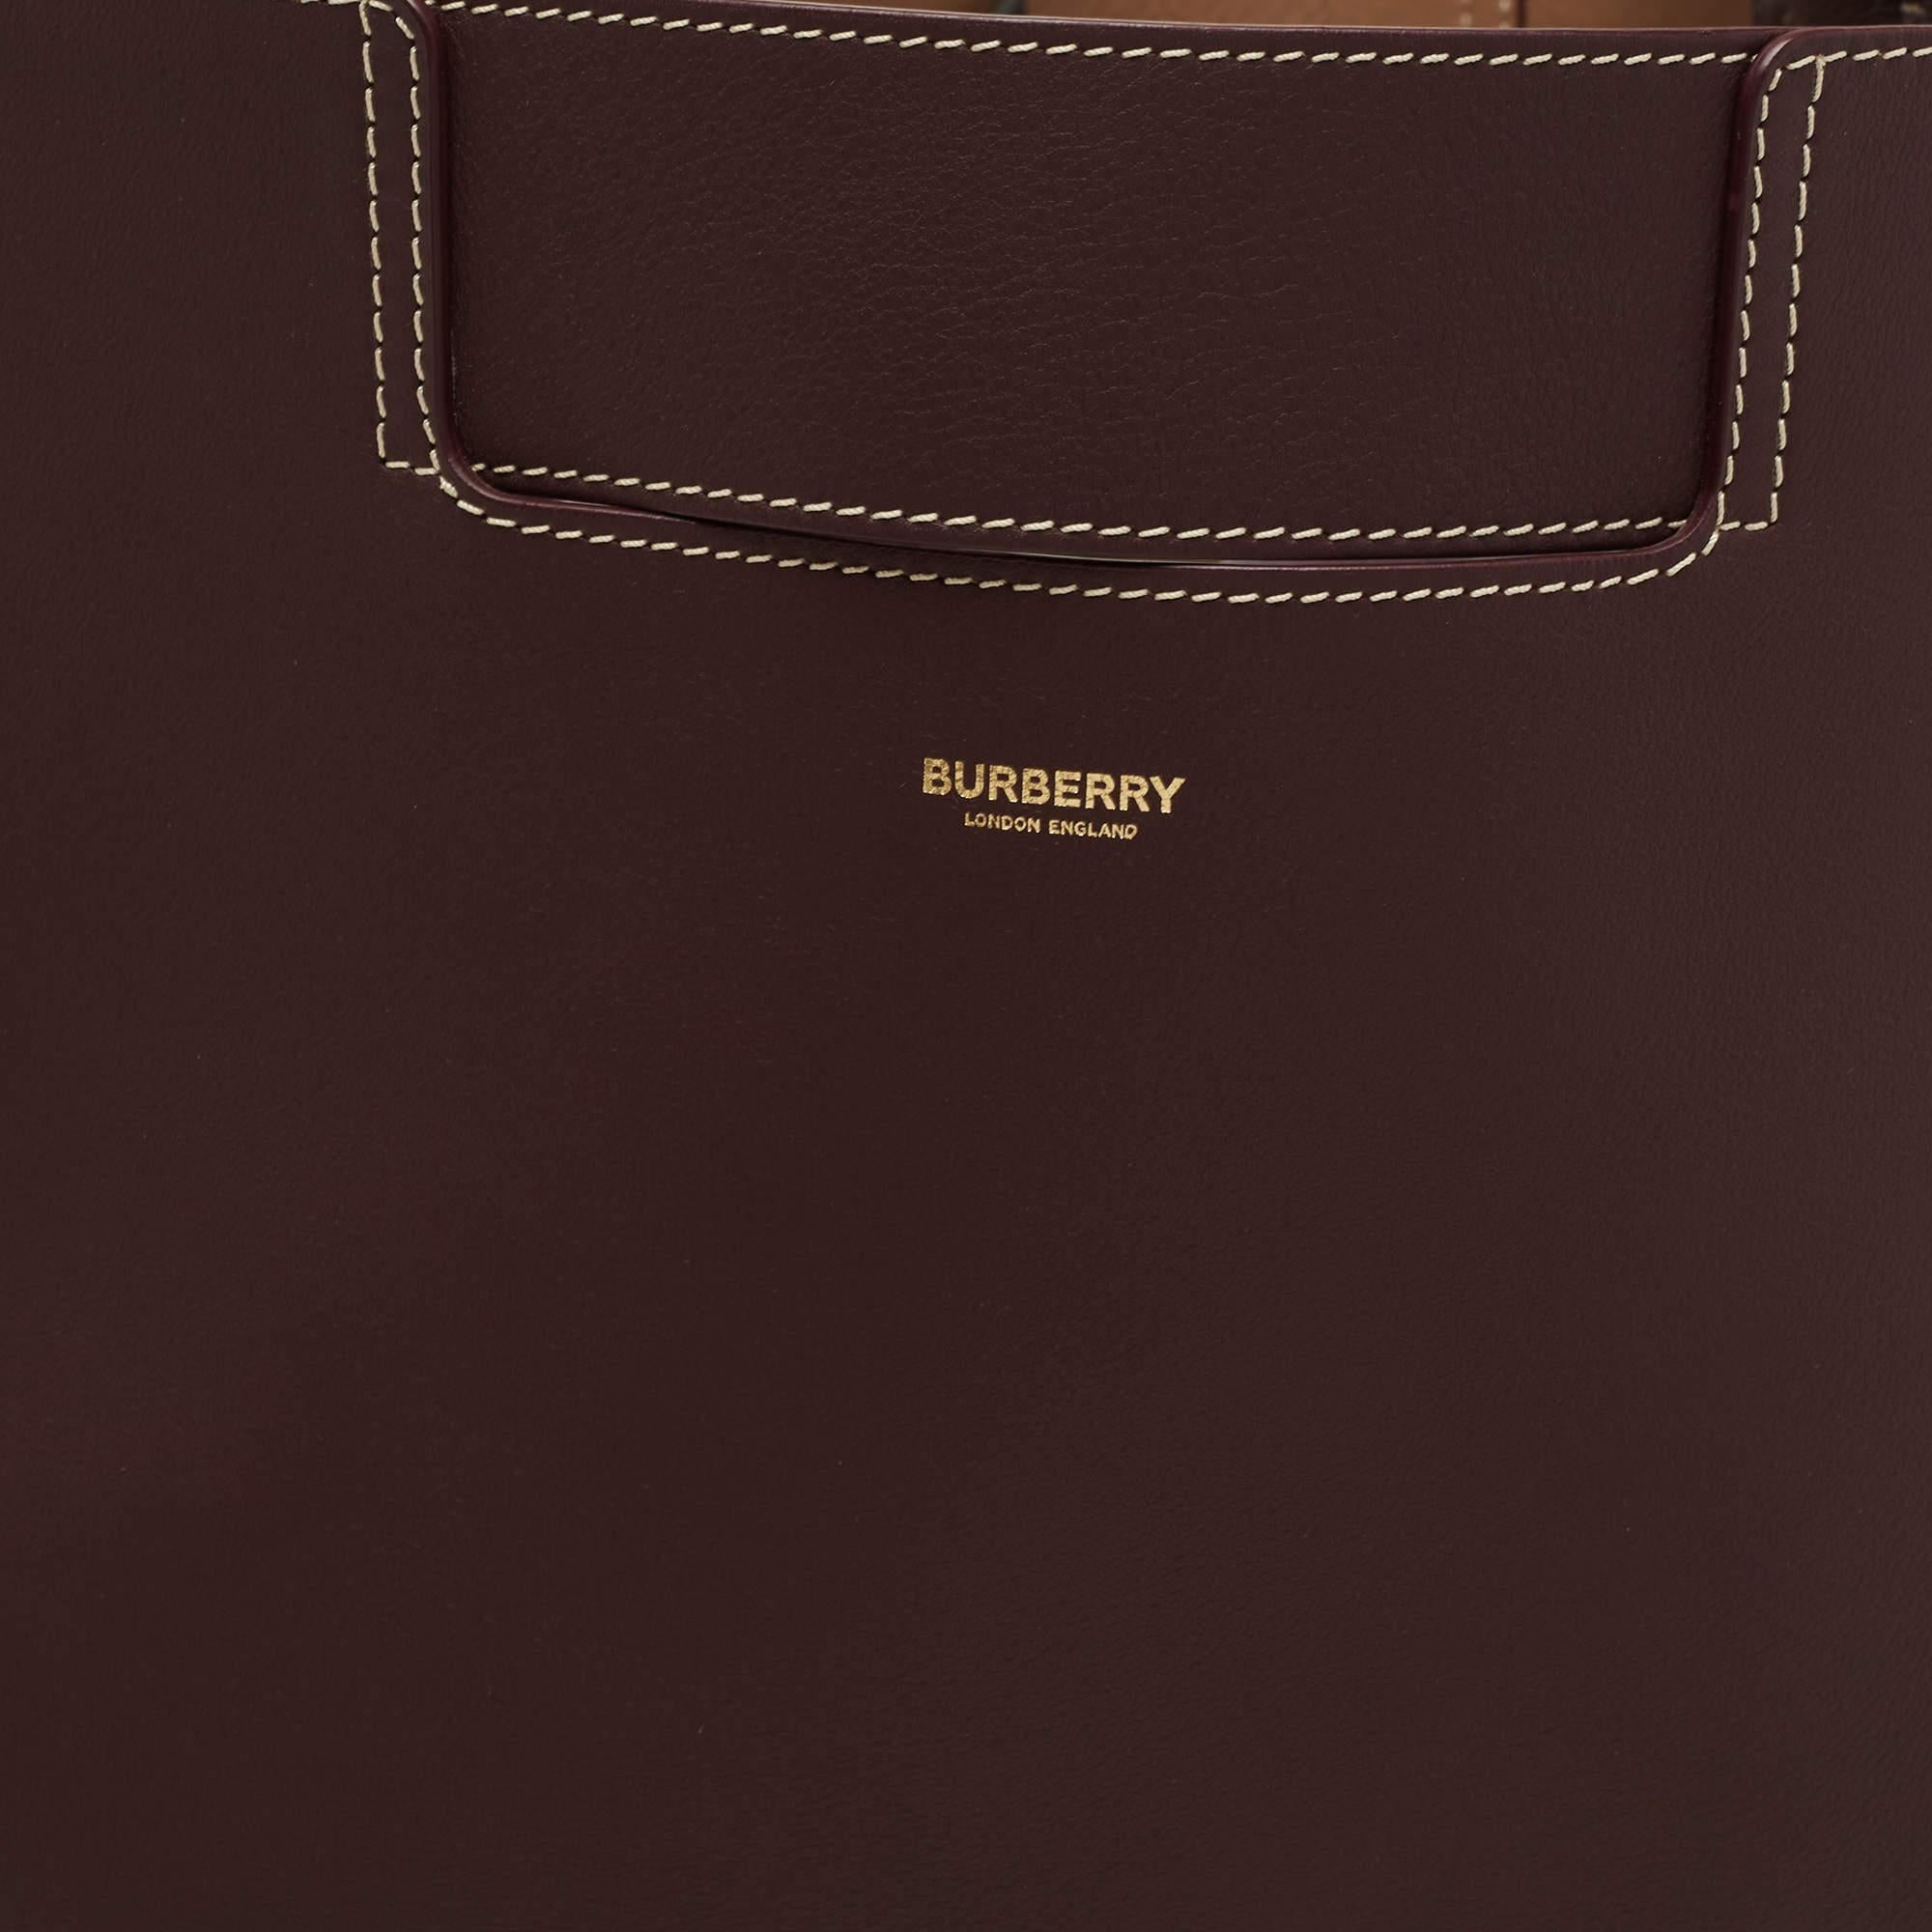 Burberry Burgundy Leather Large Basket Bag 9